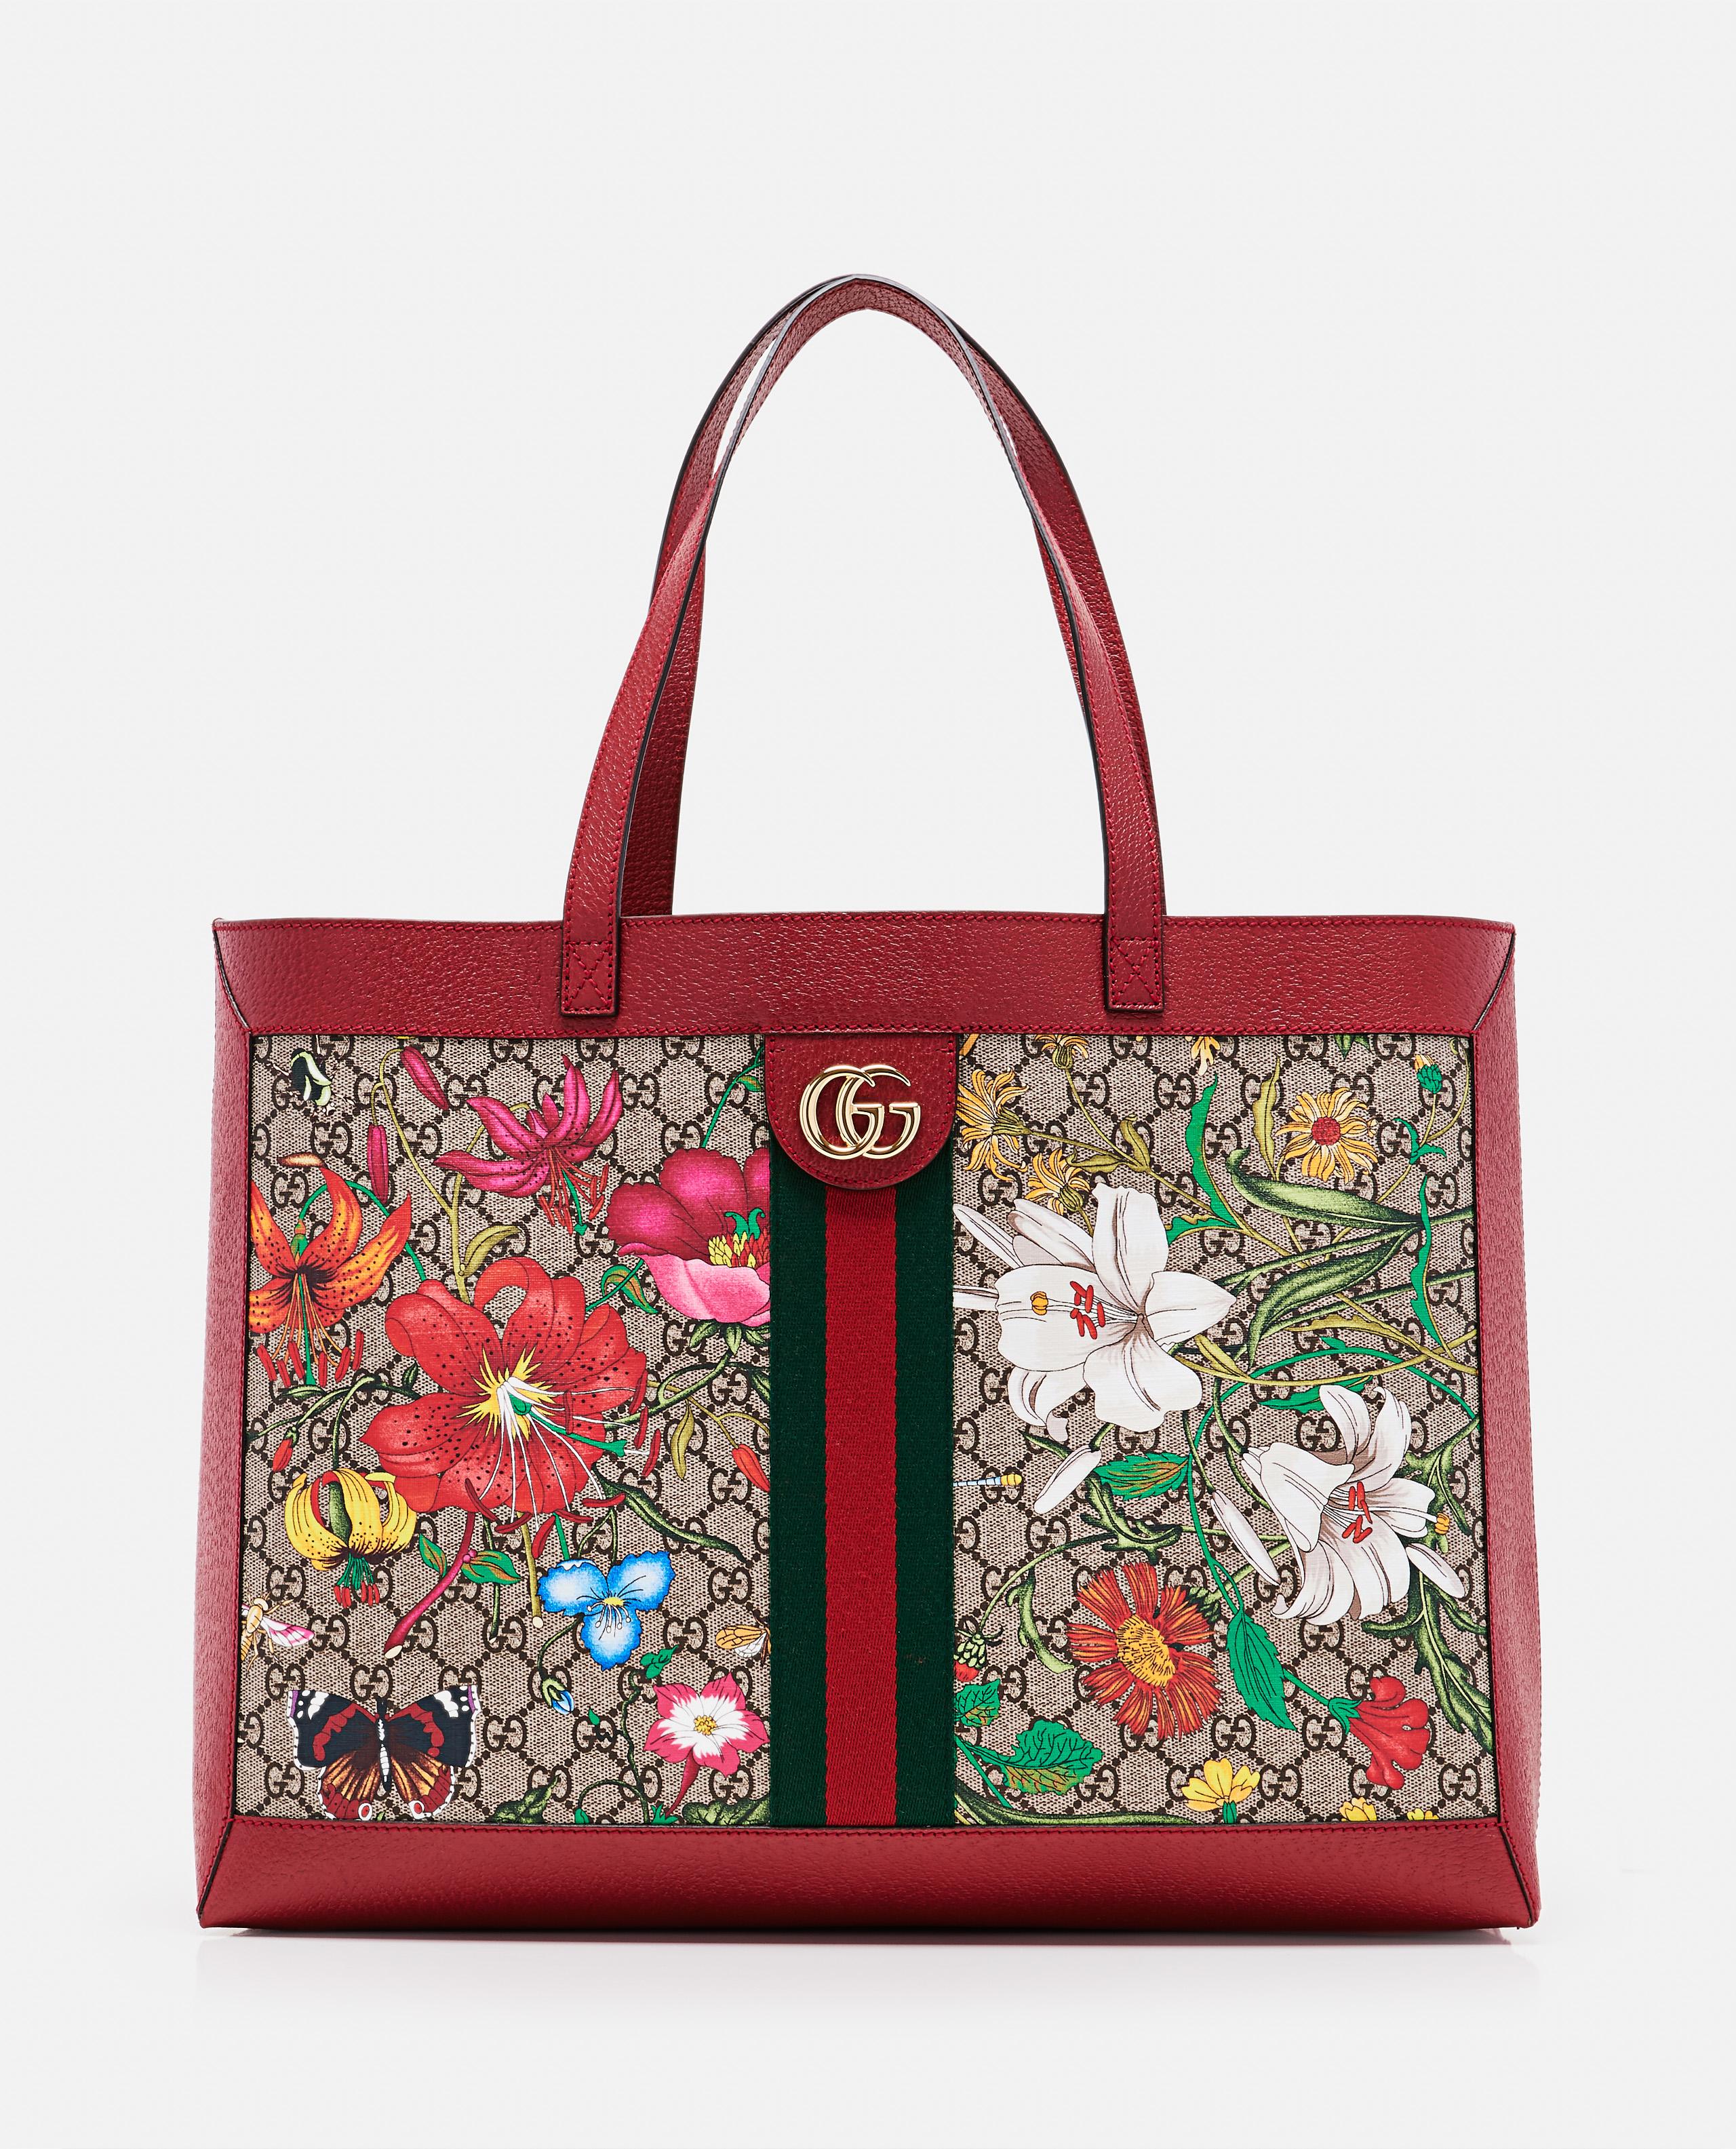 gucci floral canvas bag